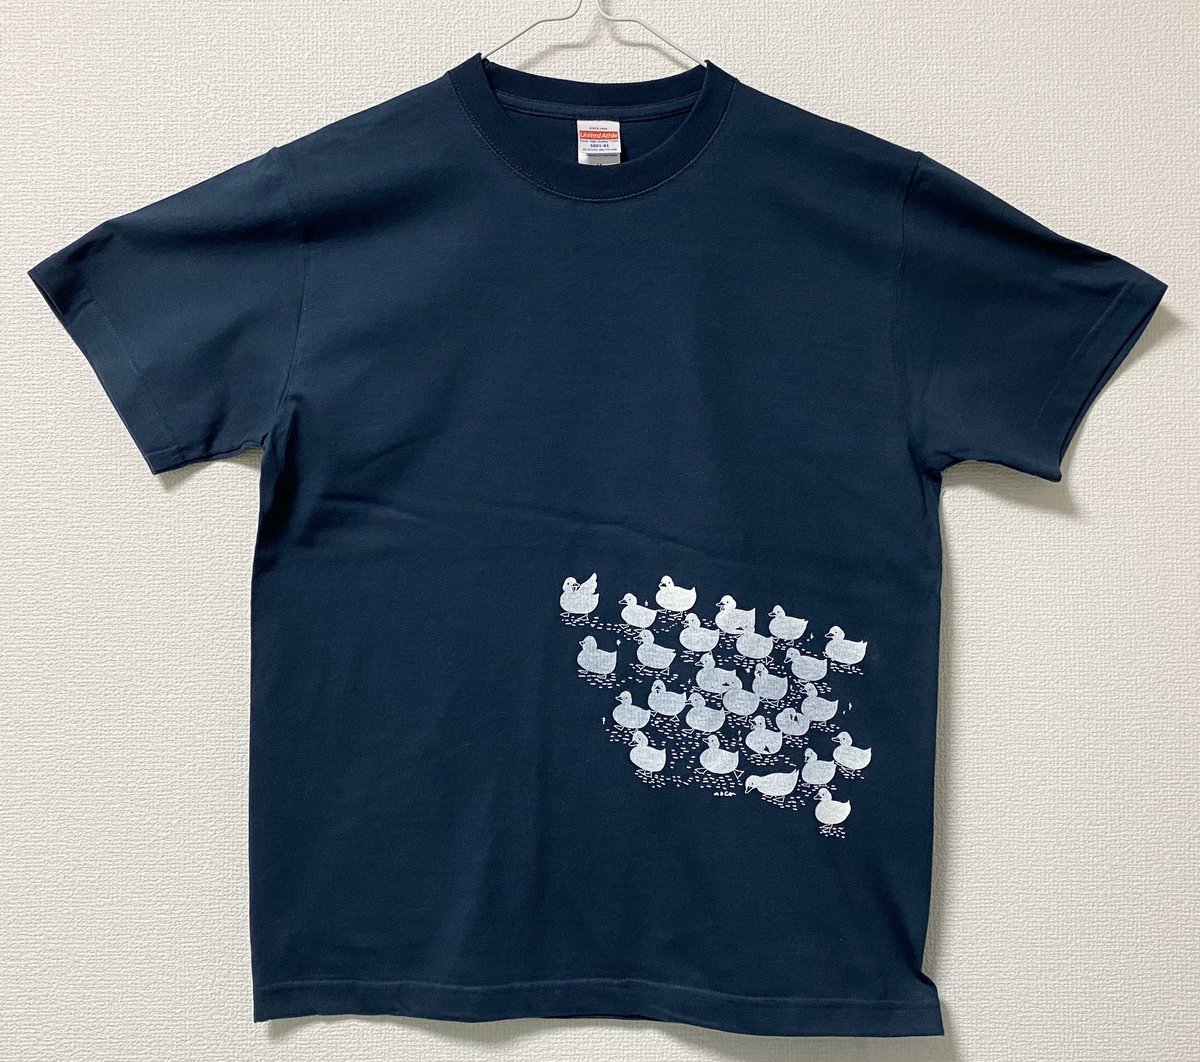 no humans shirt t-shirt blue shirt simple background print shirt solo  illustration images